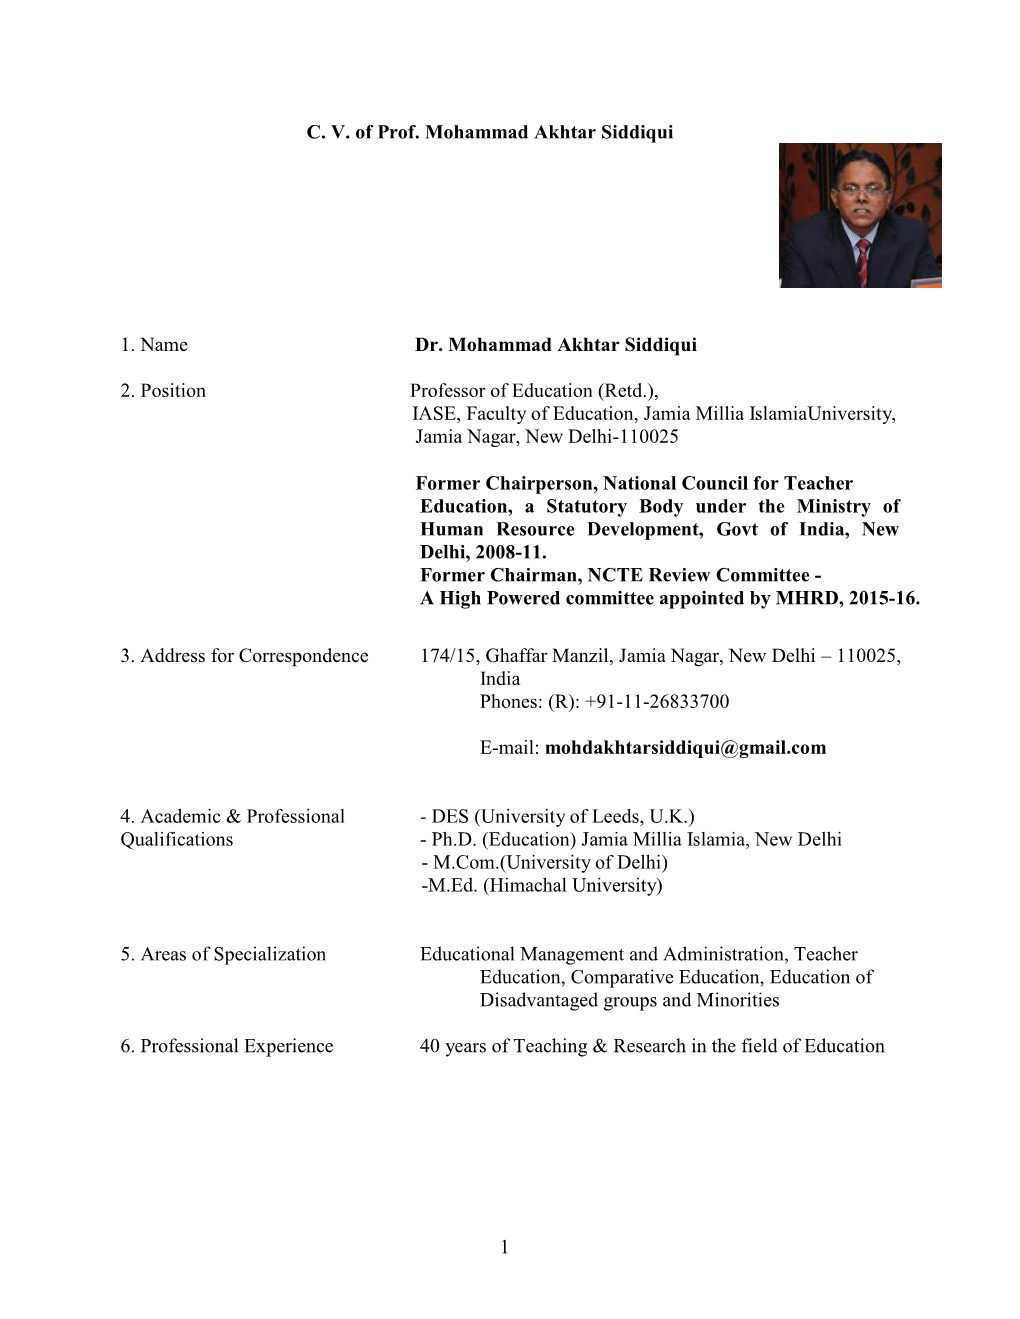 CV of Prof. Mohammad Akhtar Siddiqui